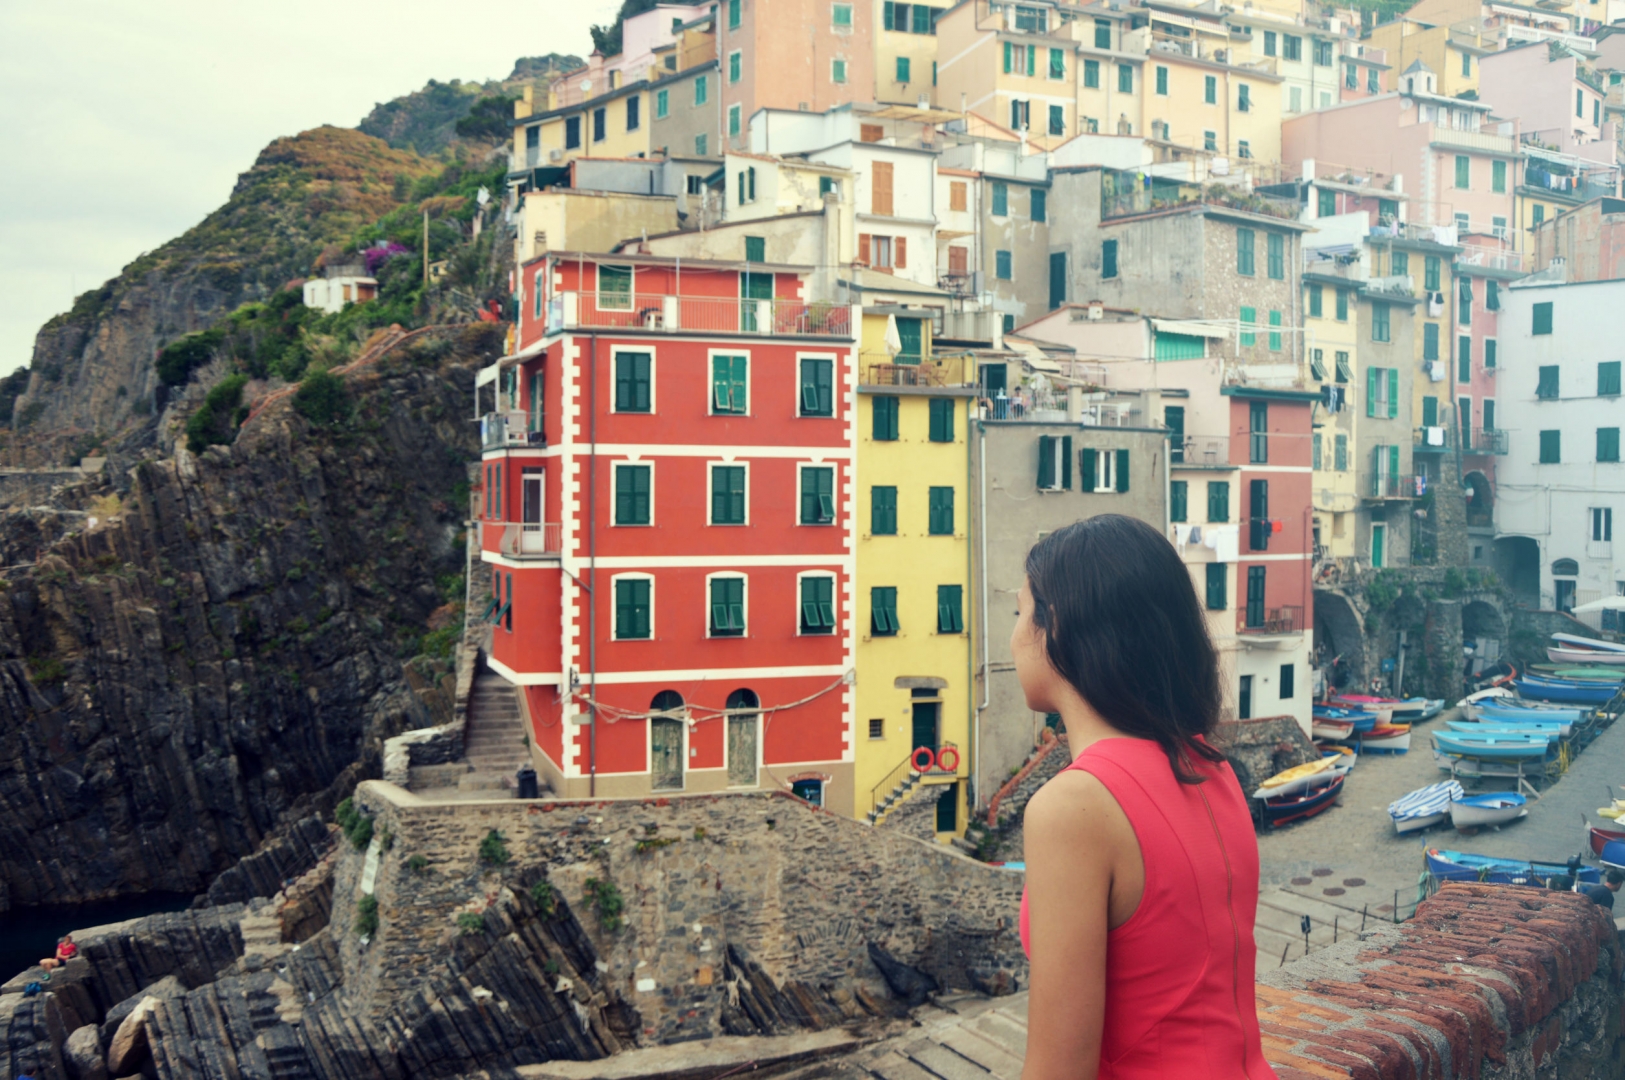 Portofino, la jolie ville colorée ! 